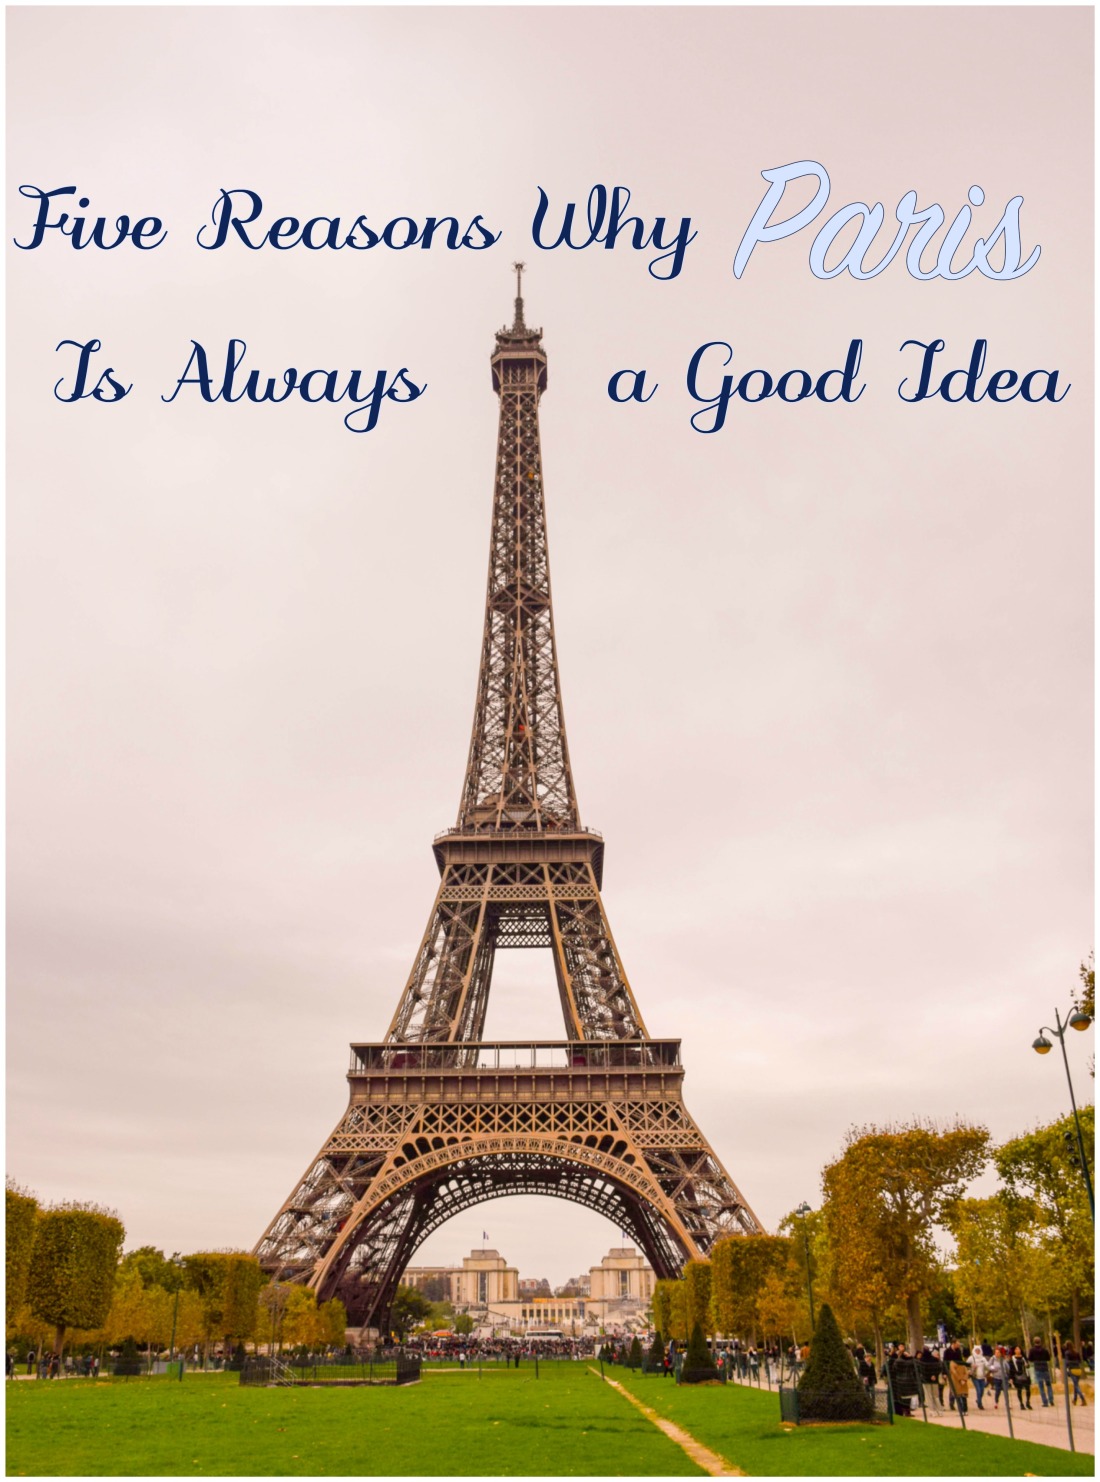 Five Reasons Why Paris